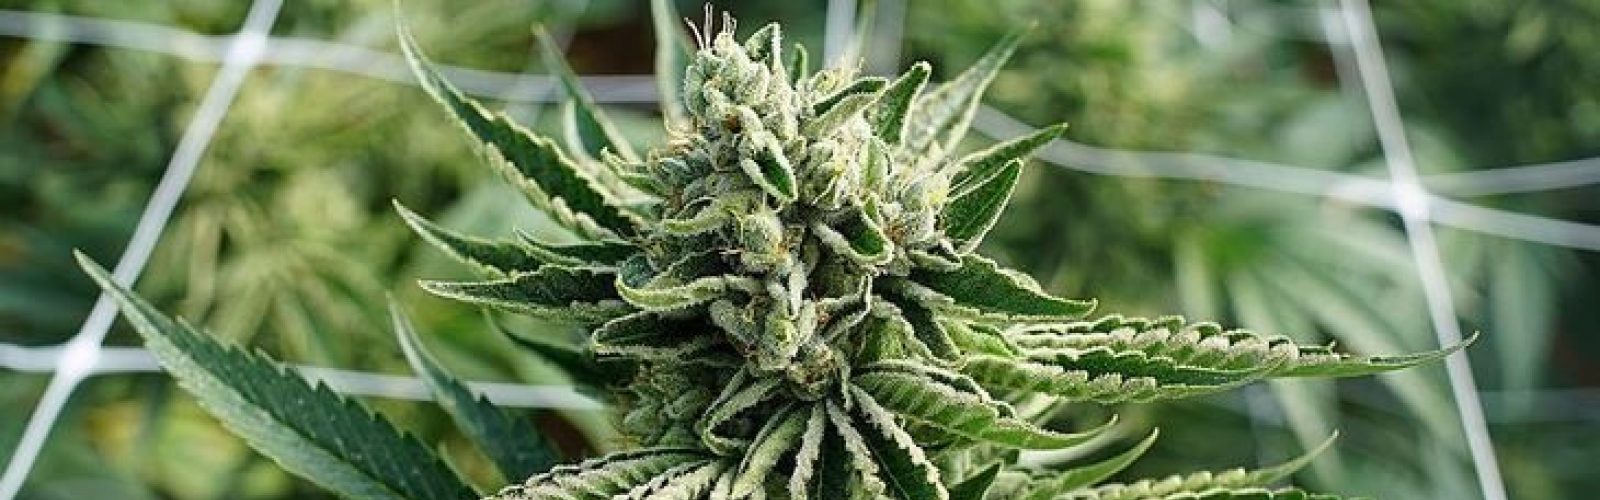 Cannabis flowering plant